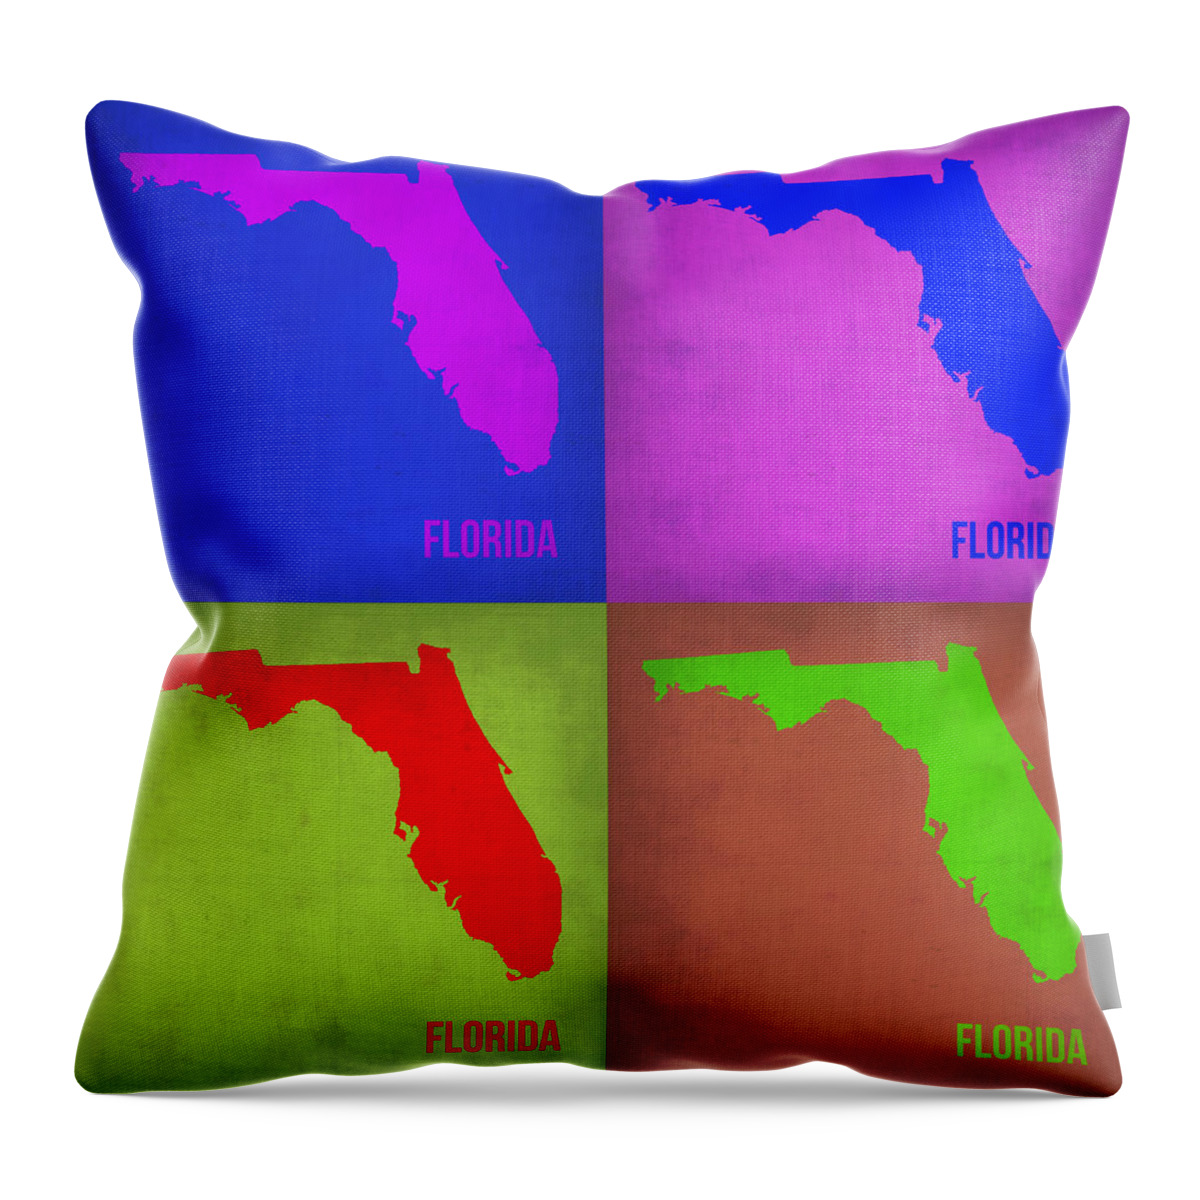 Florida Map Throw Pillow featuring the painting Florida Pop Art Map 1 by Naxart Studio